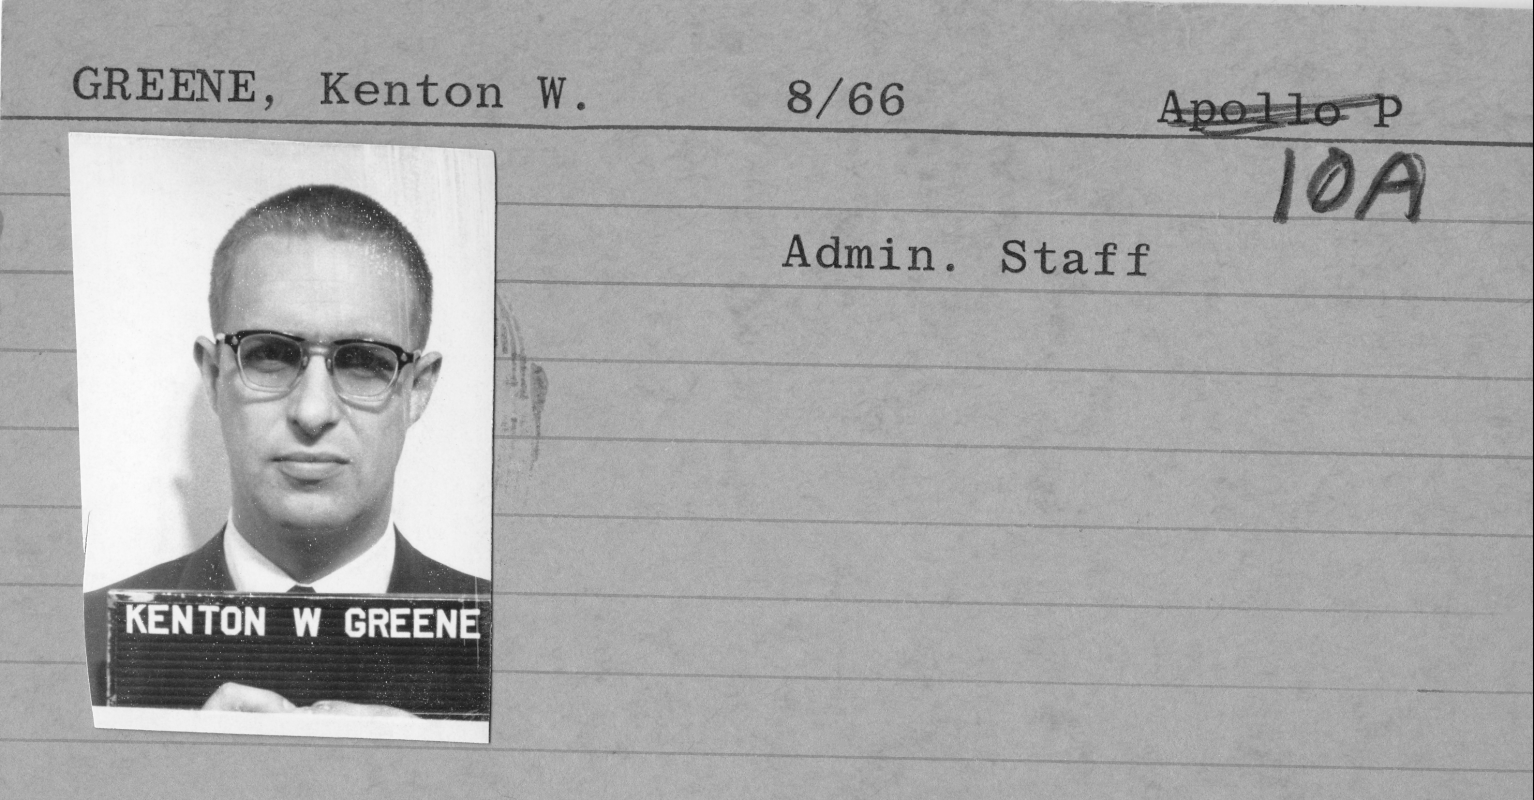 Kenton Greene Employee Card